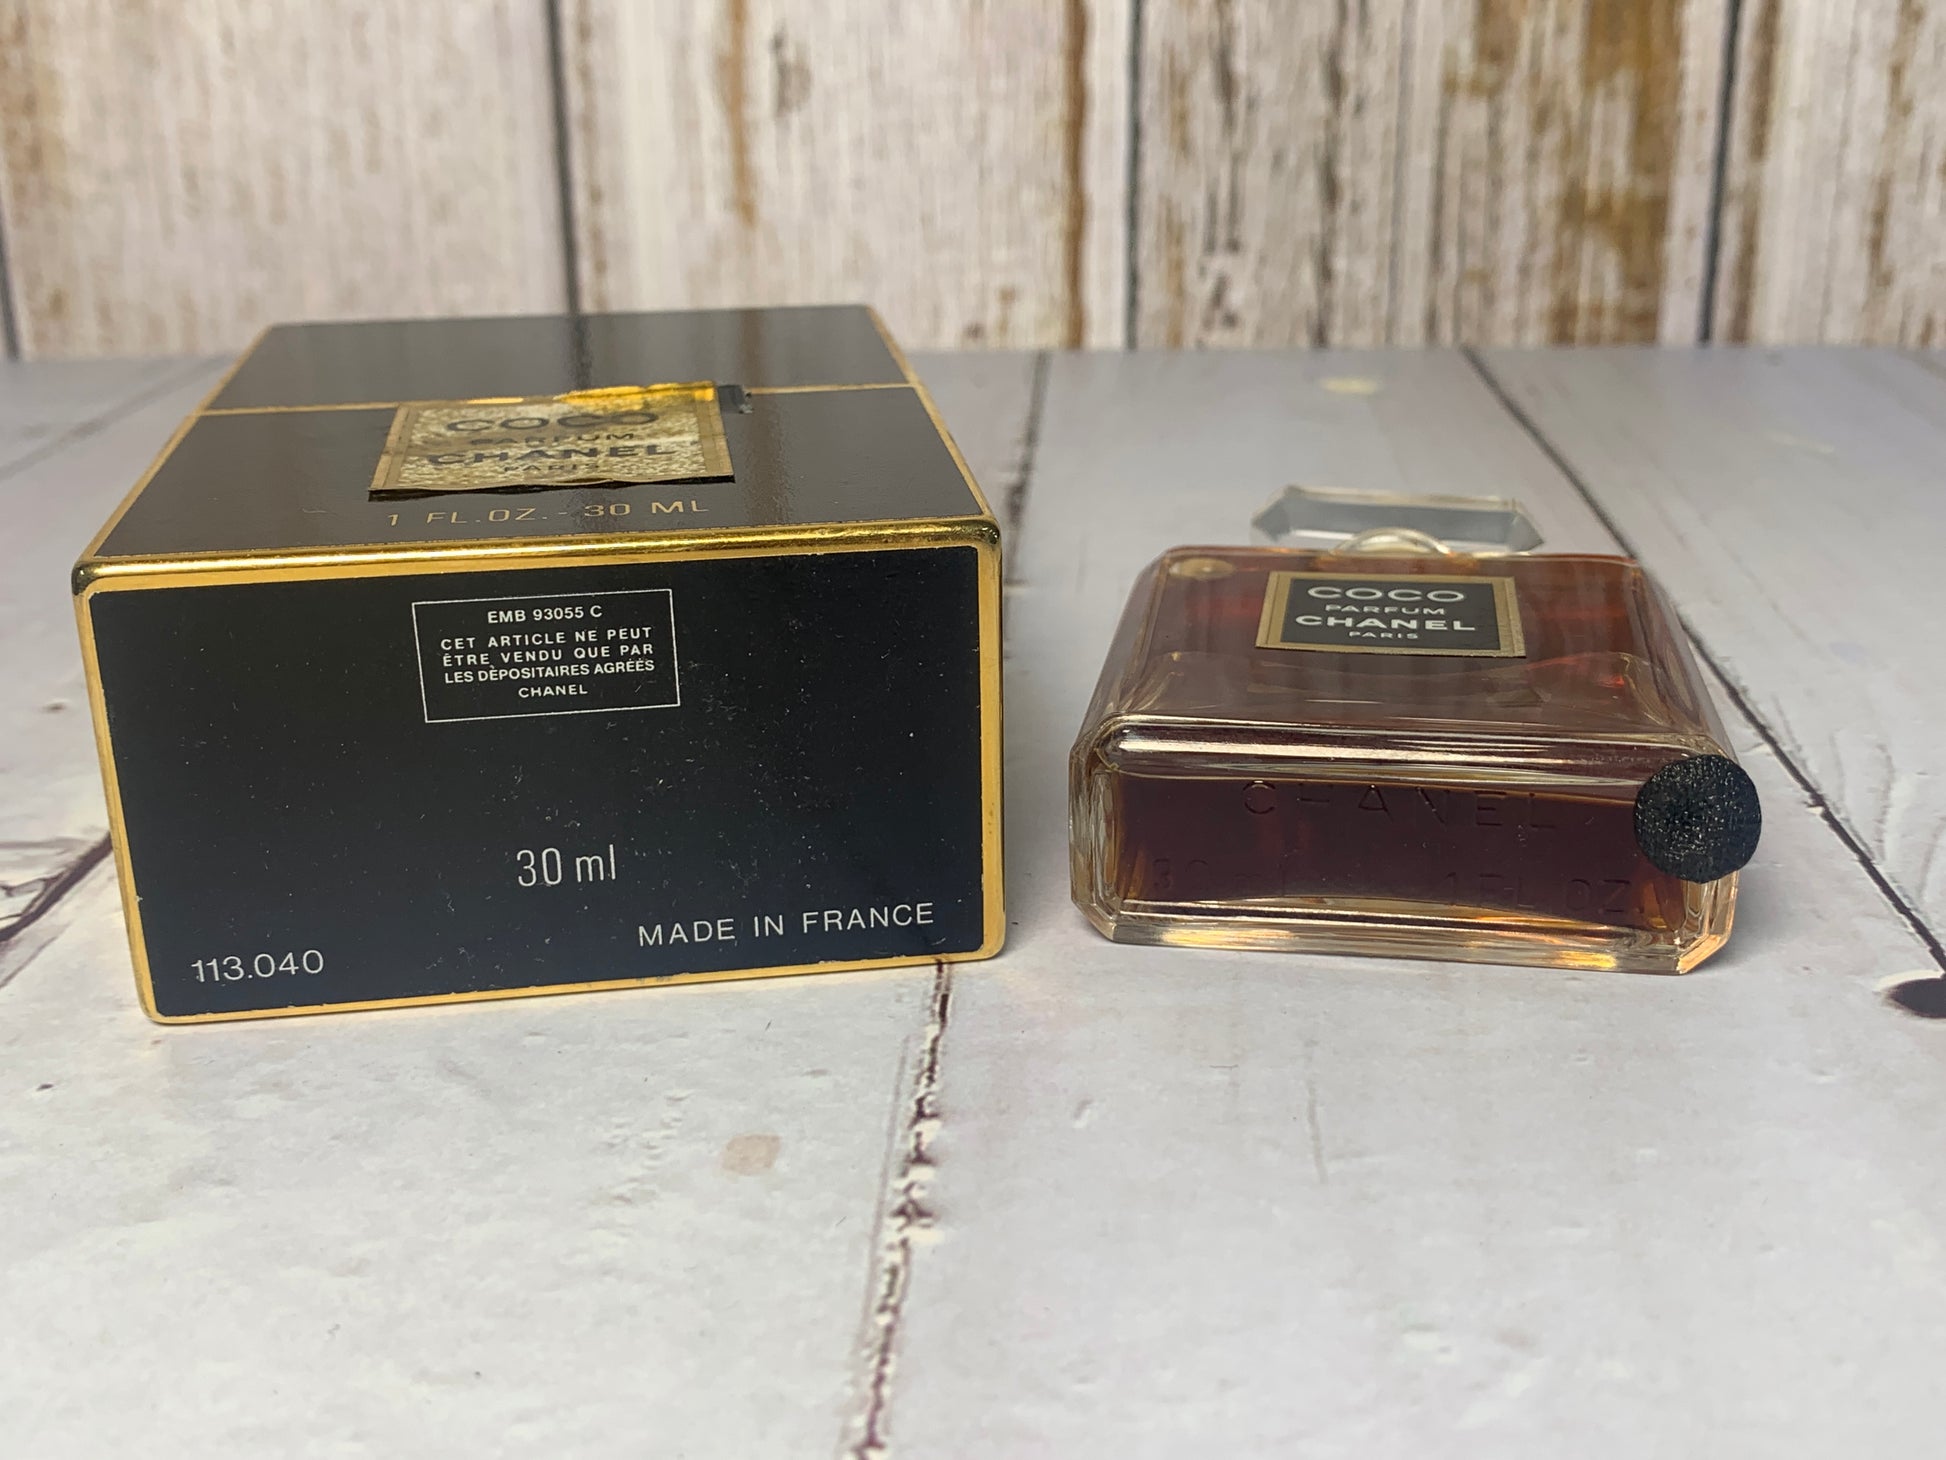 Rare Chanel Coco parfum perfume 30ml 1 oz - 010523-6 – Trendy Ground